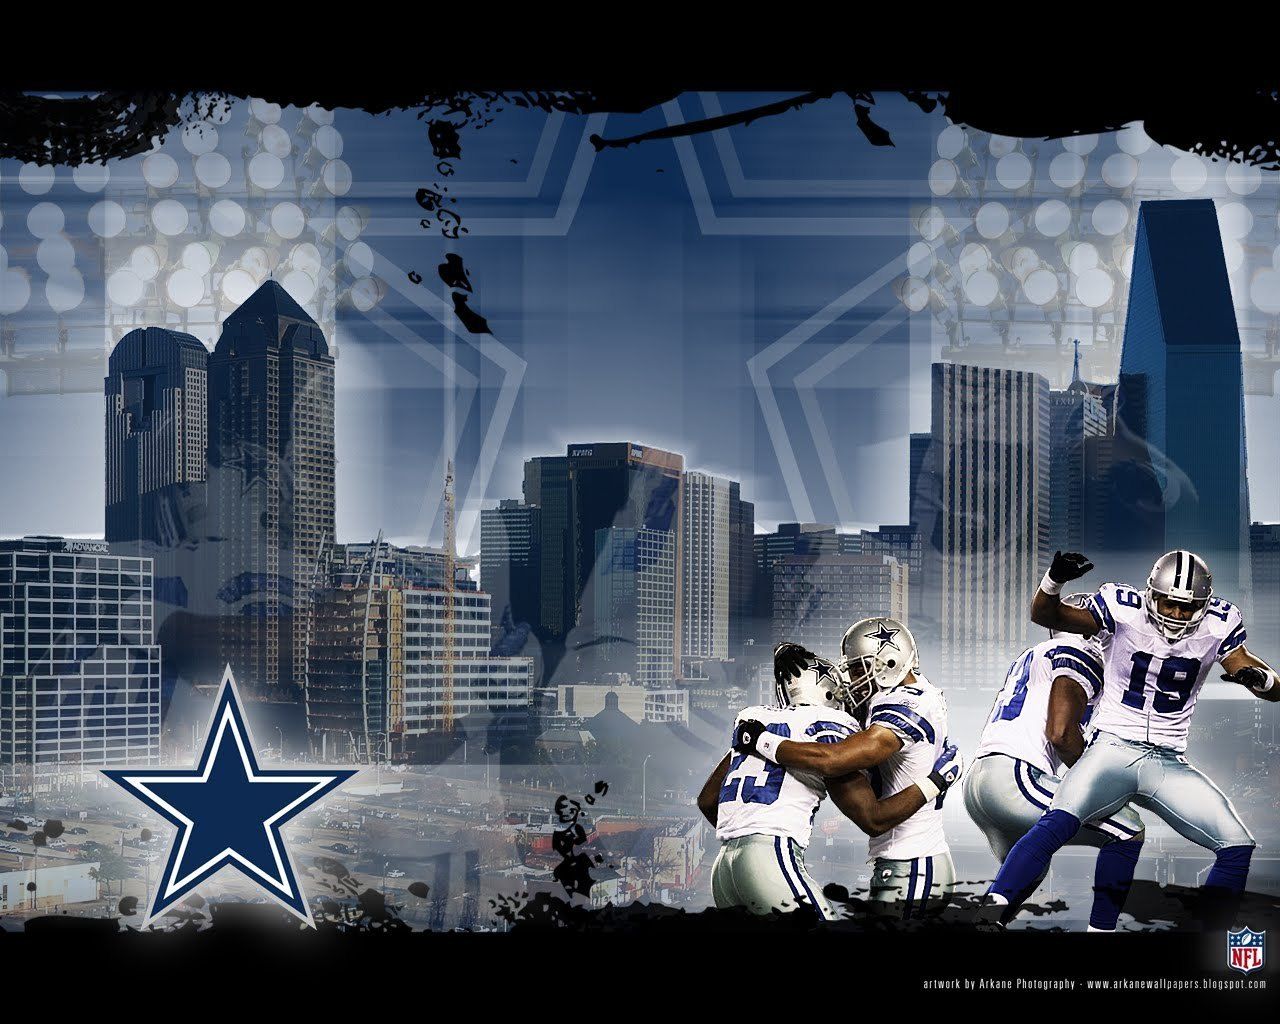 Dallas Cowboys Wallpaper on Pinterest Dallas Cowboys, Dez Bryant